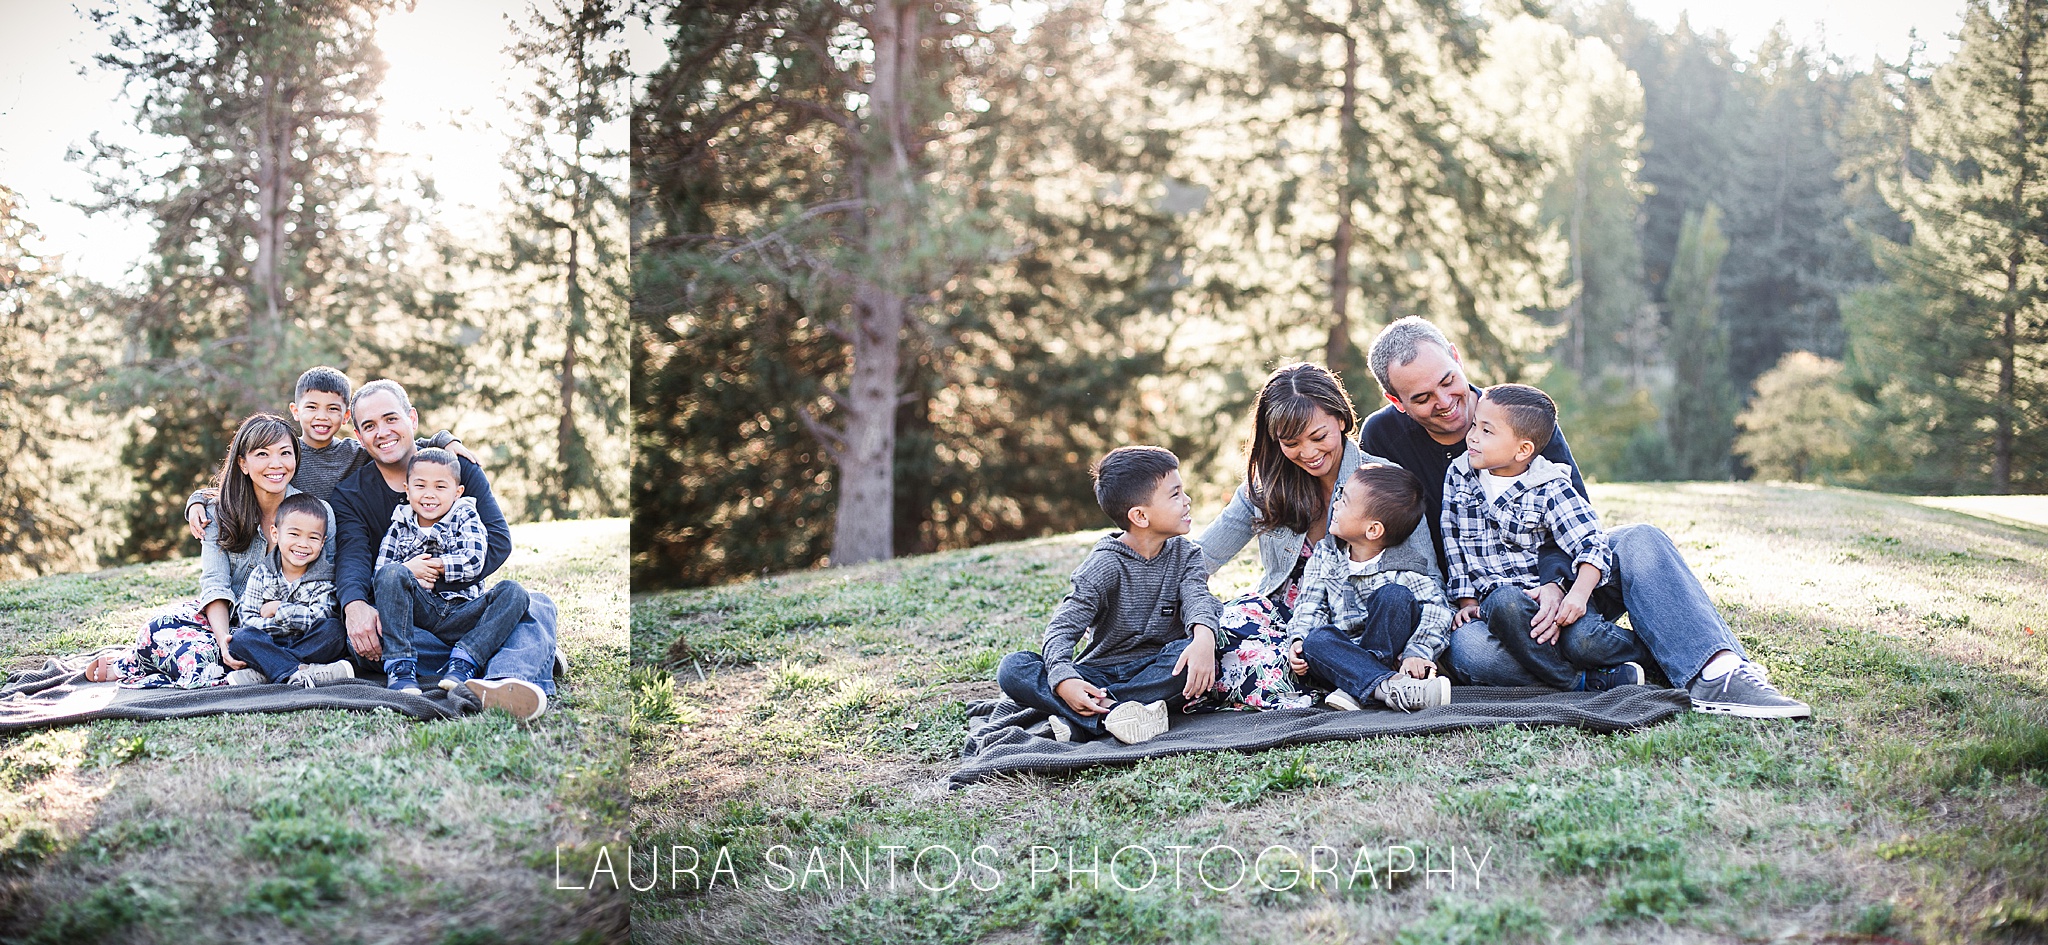 Laura Santos Photography Portland Oregon Family Photographer_0755.jpg